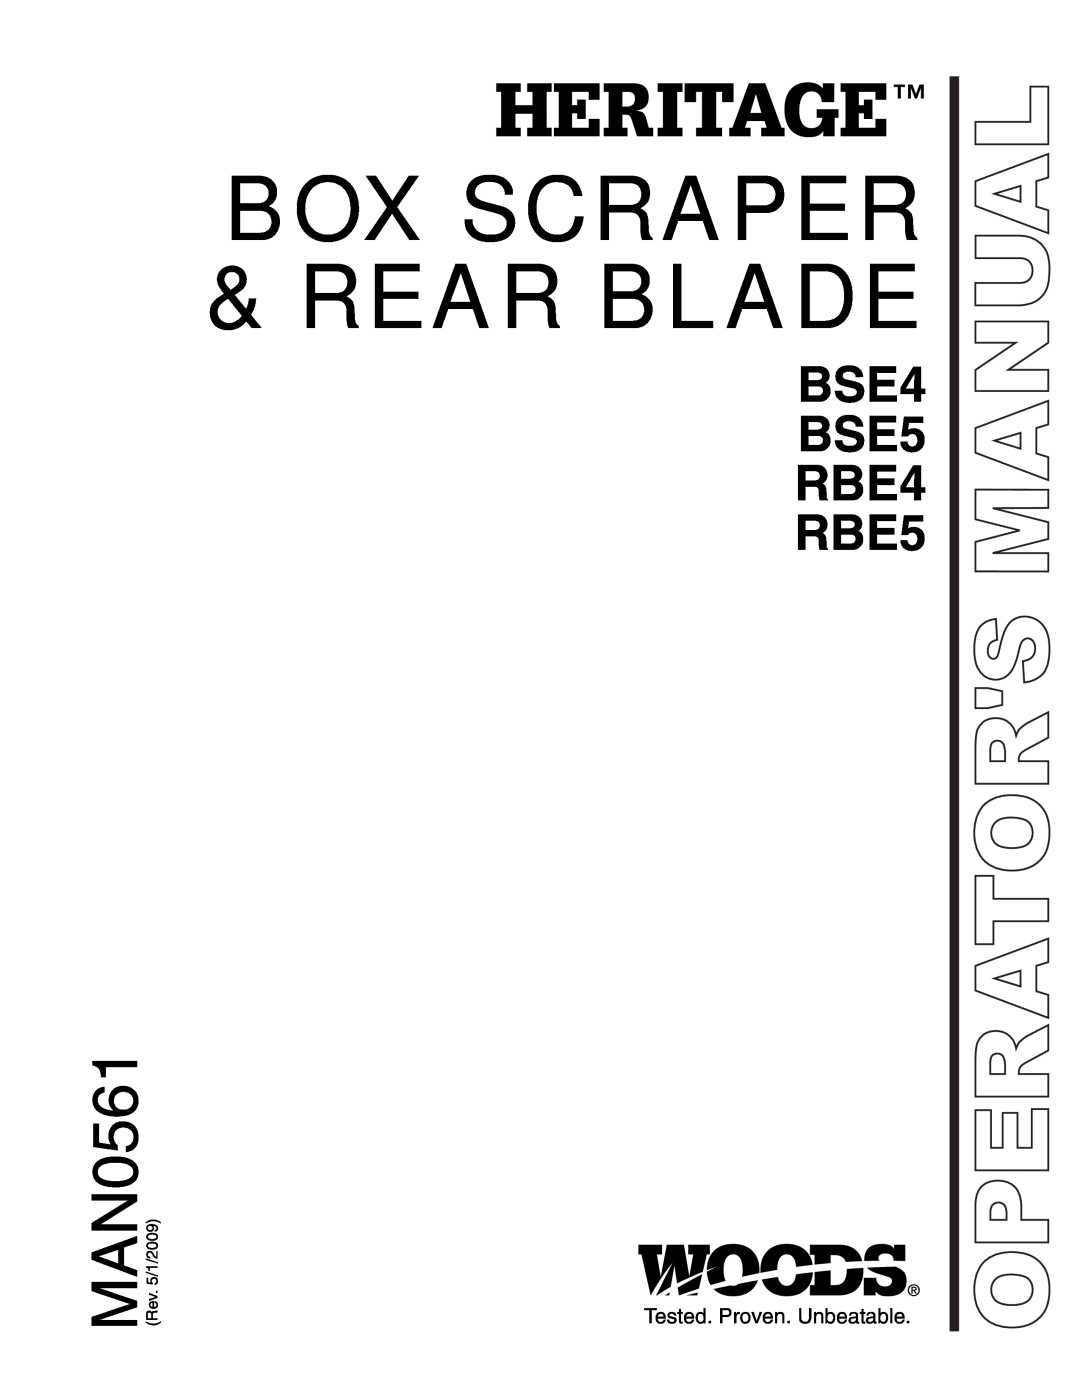 Woods Equipment manual Box Scraper &Rear Blade, Heritage, MAN0561, BSE4 BSE5 RBE4 RBE5, Operators Manual 